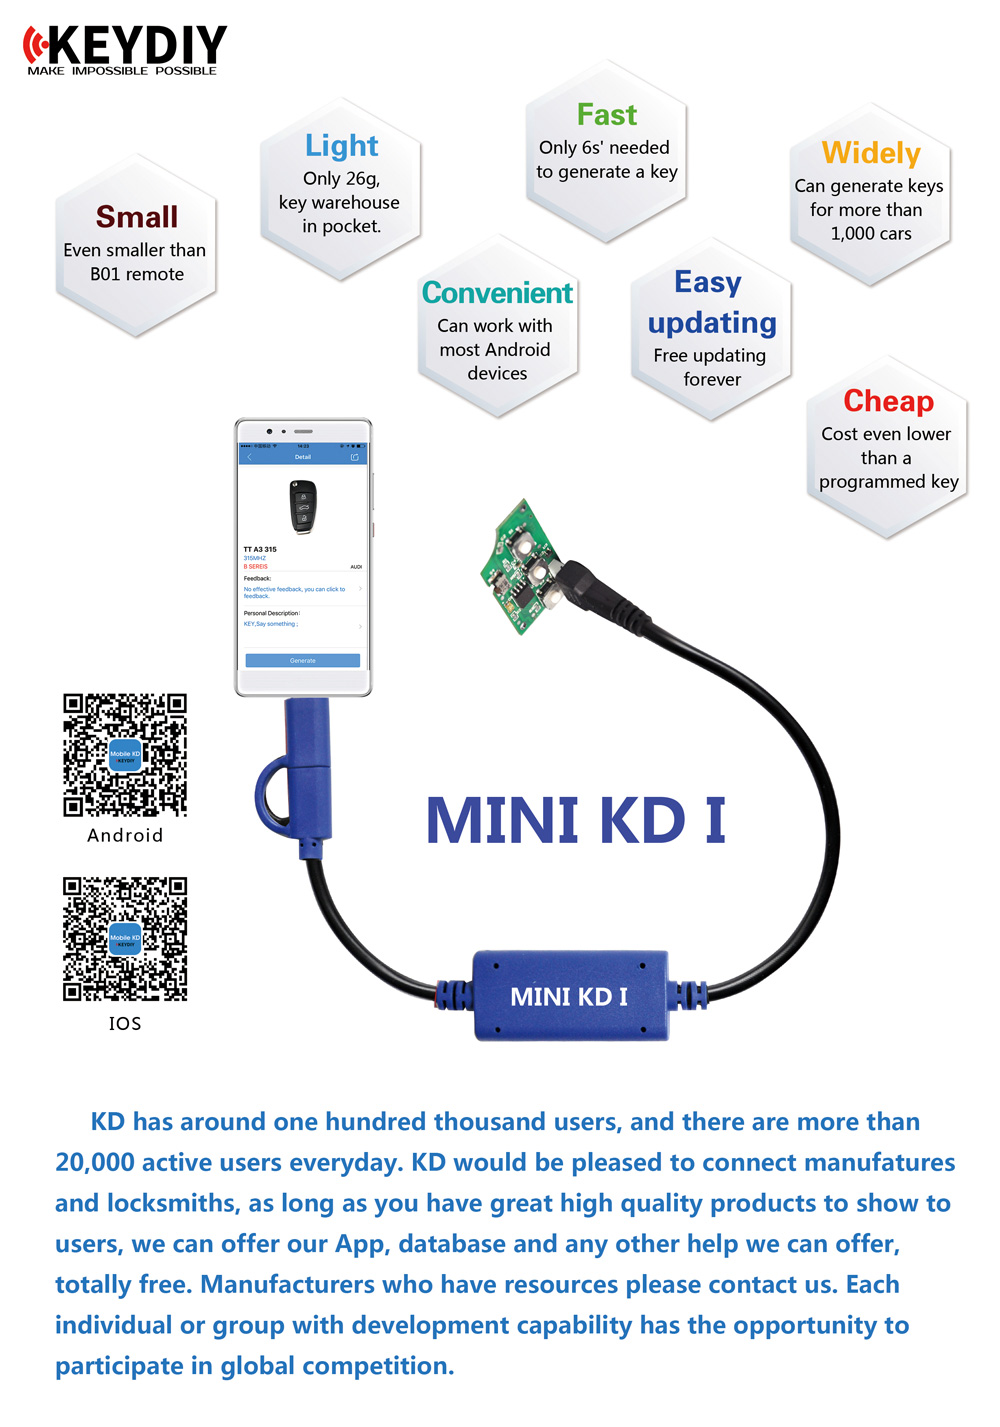 KEYDIY Mini KD Remote Key Maker Generator features